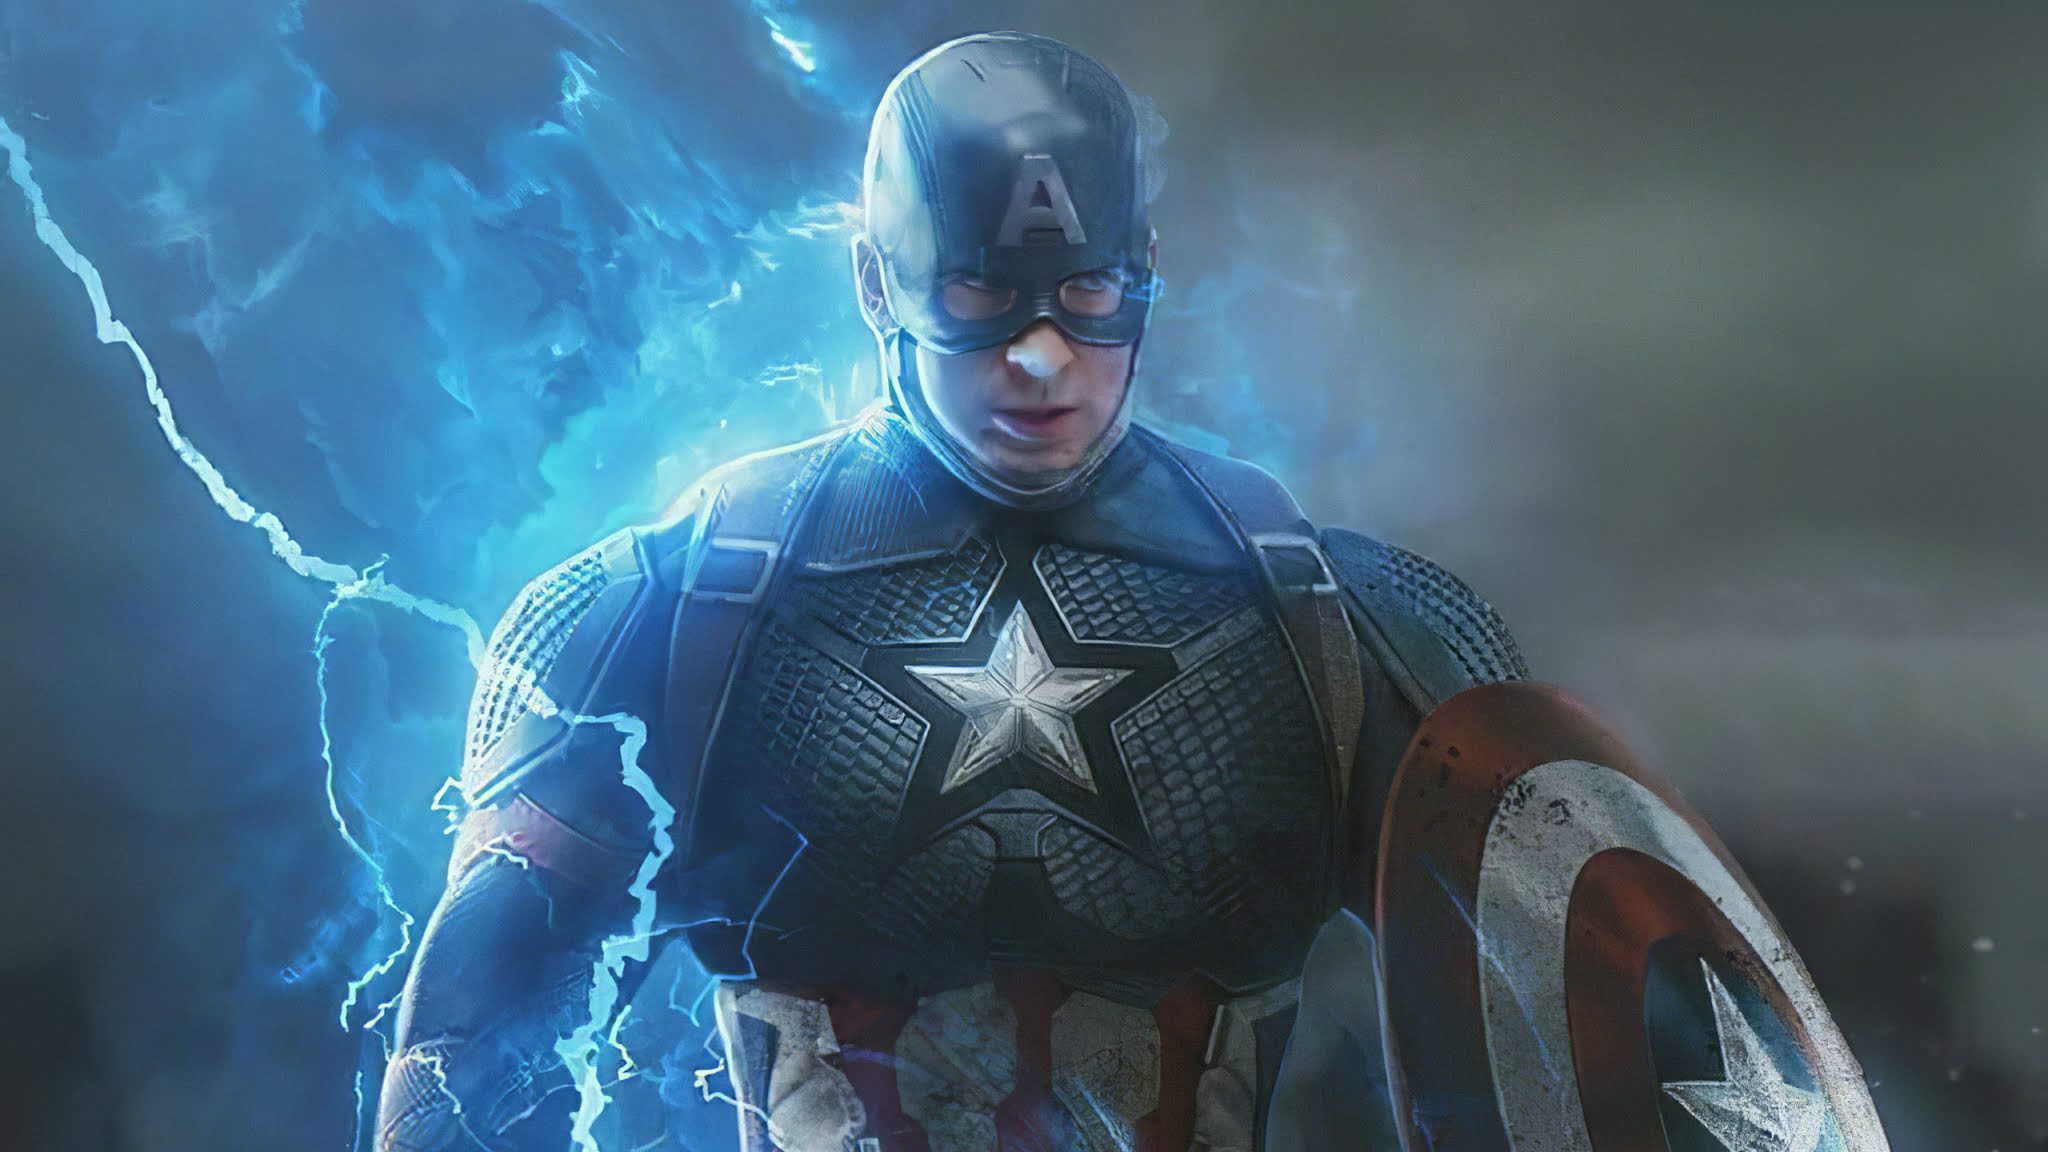 HD image of Captain America